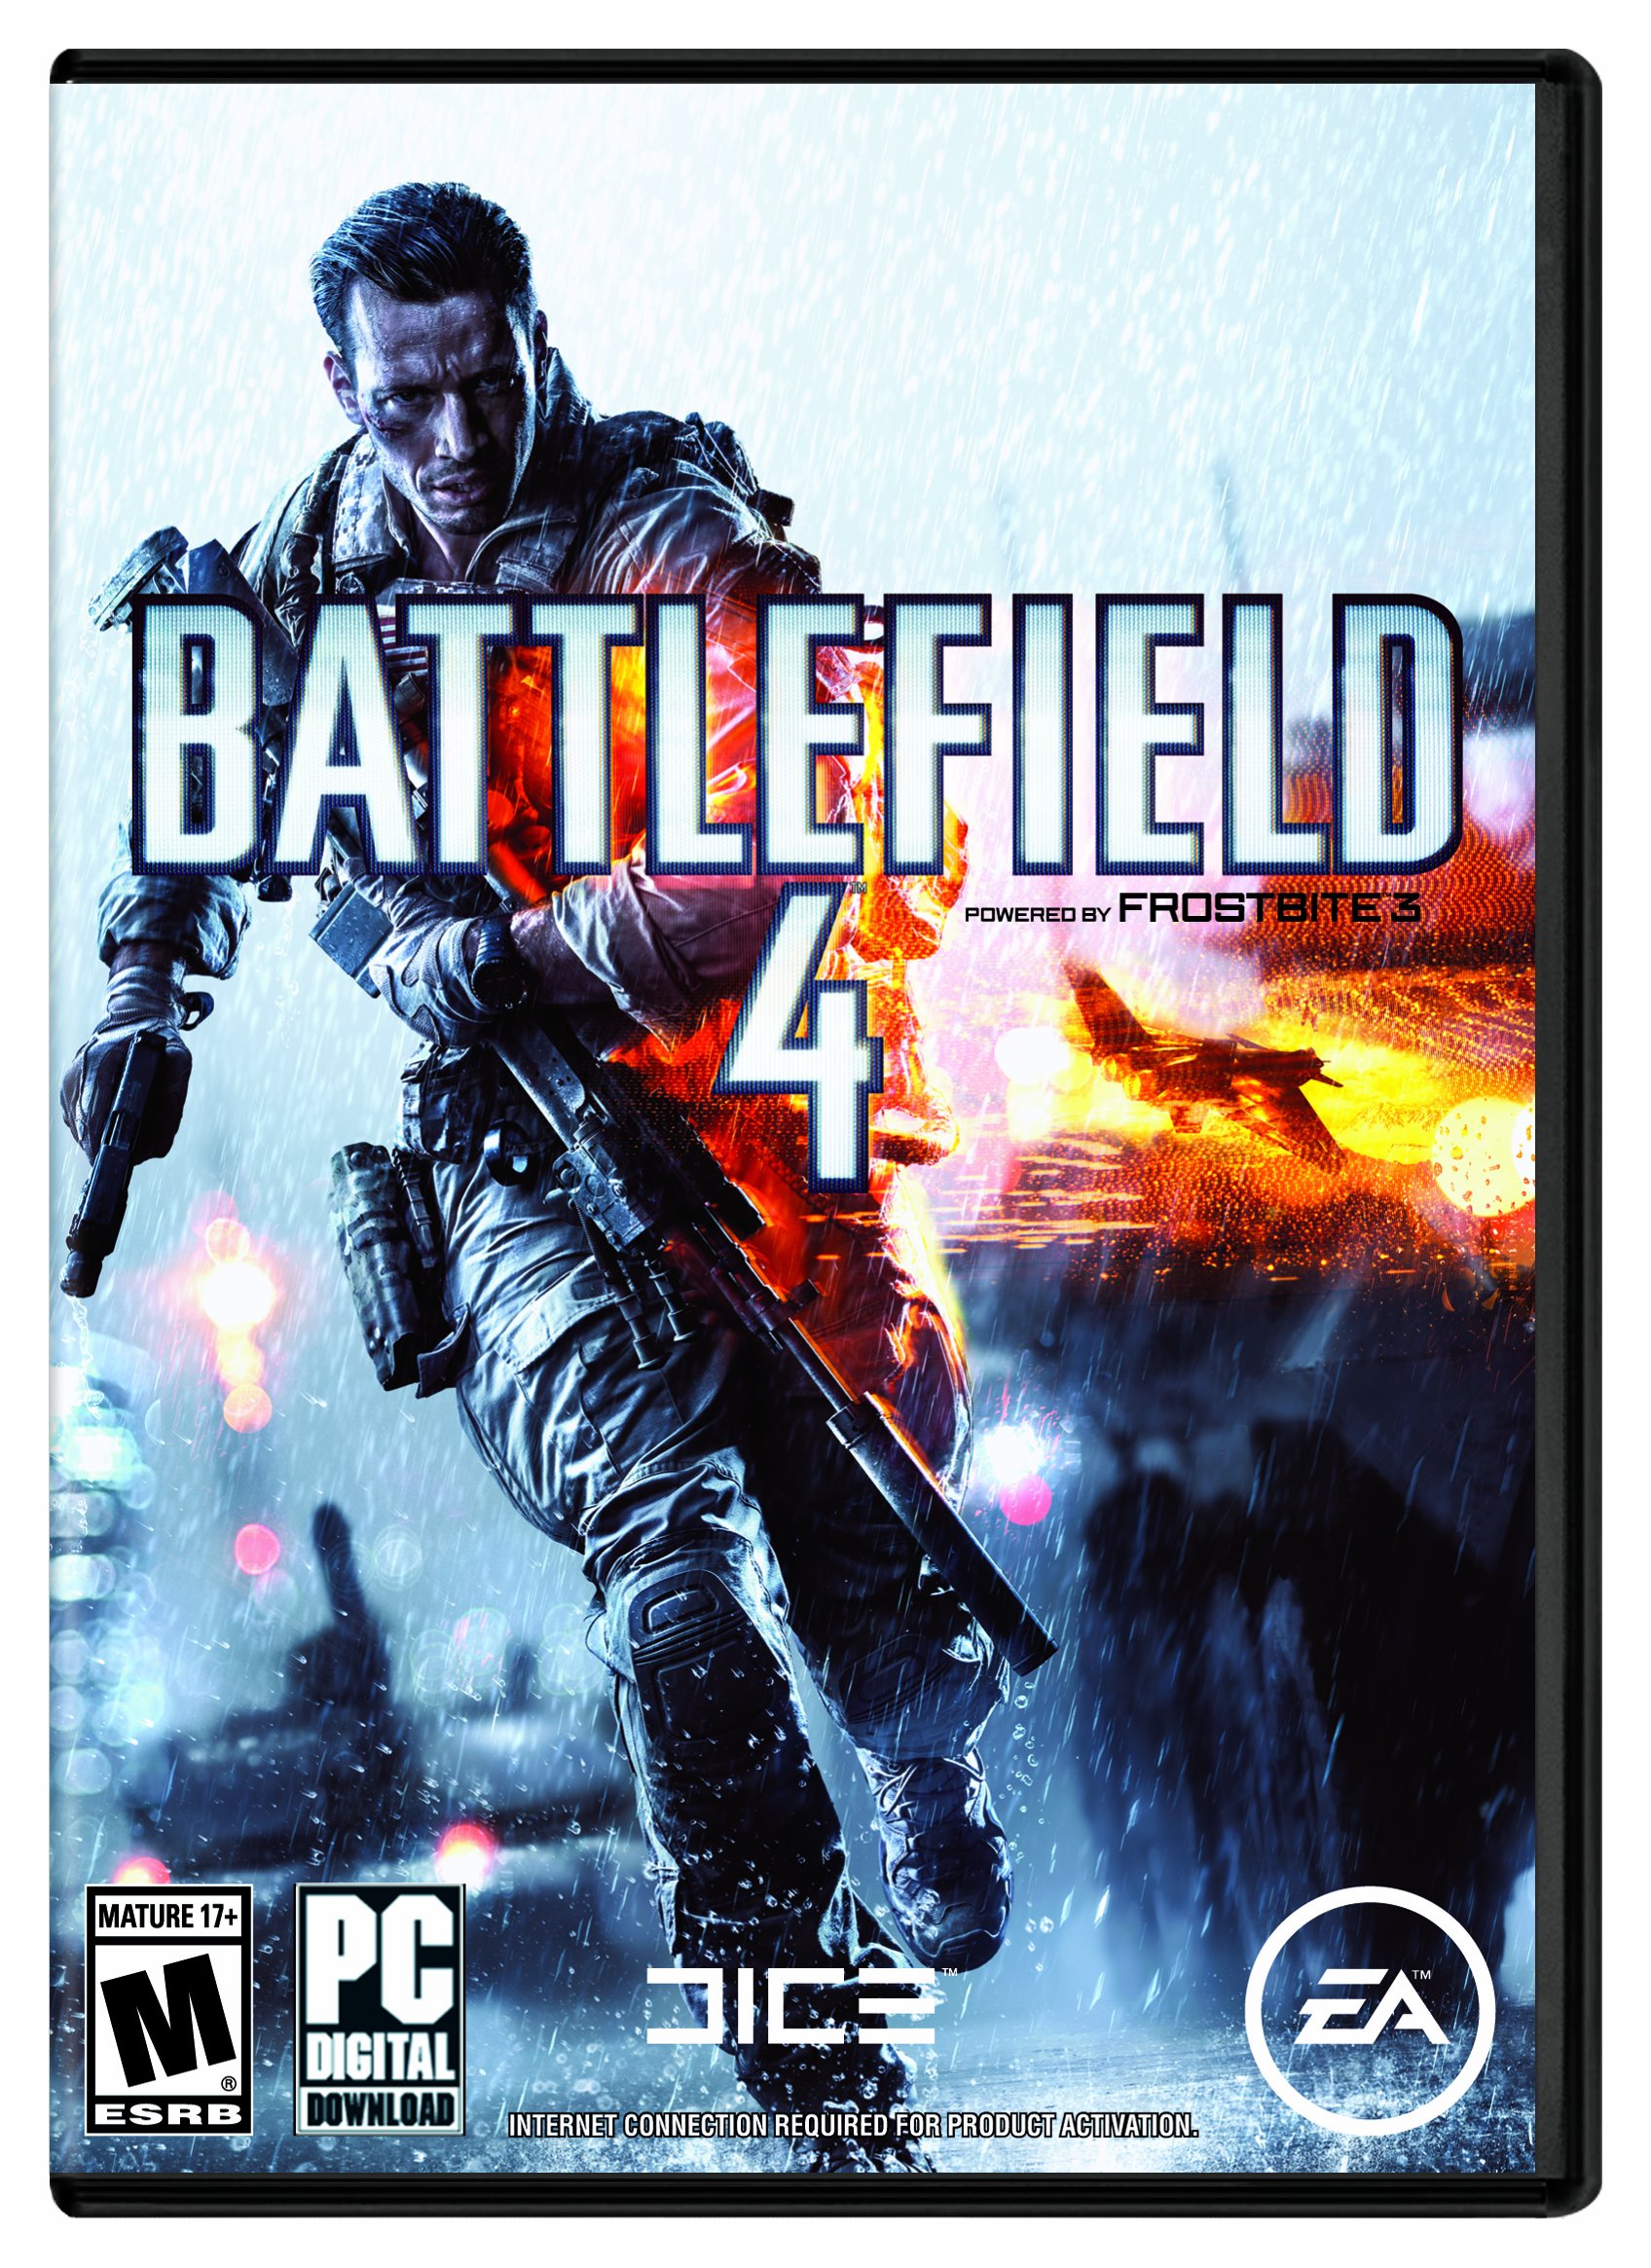 Battlefield 4 – PC Origin [Online Game Code]